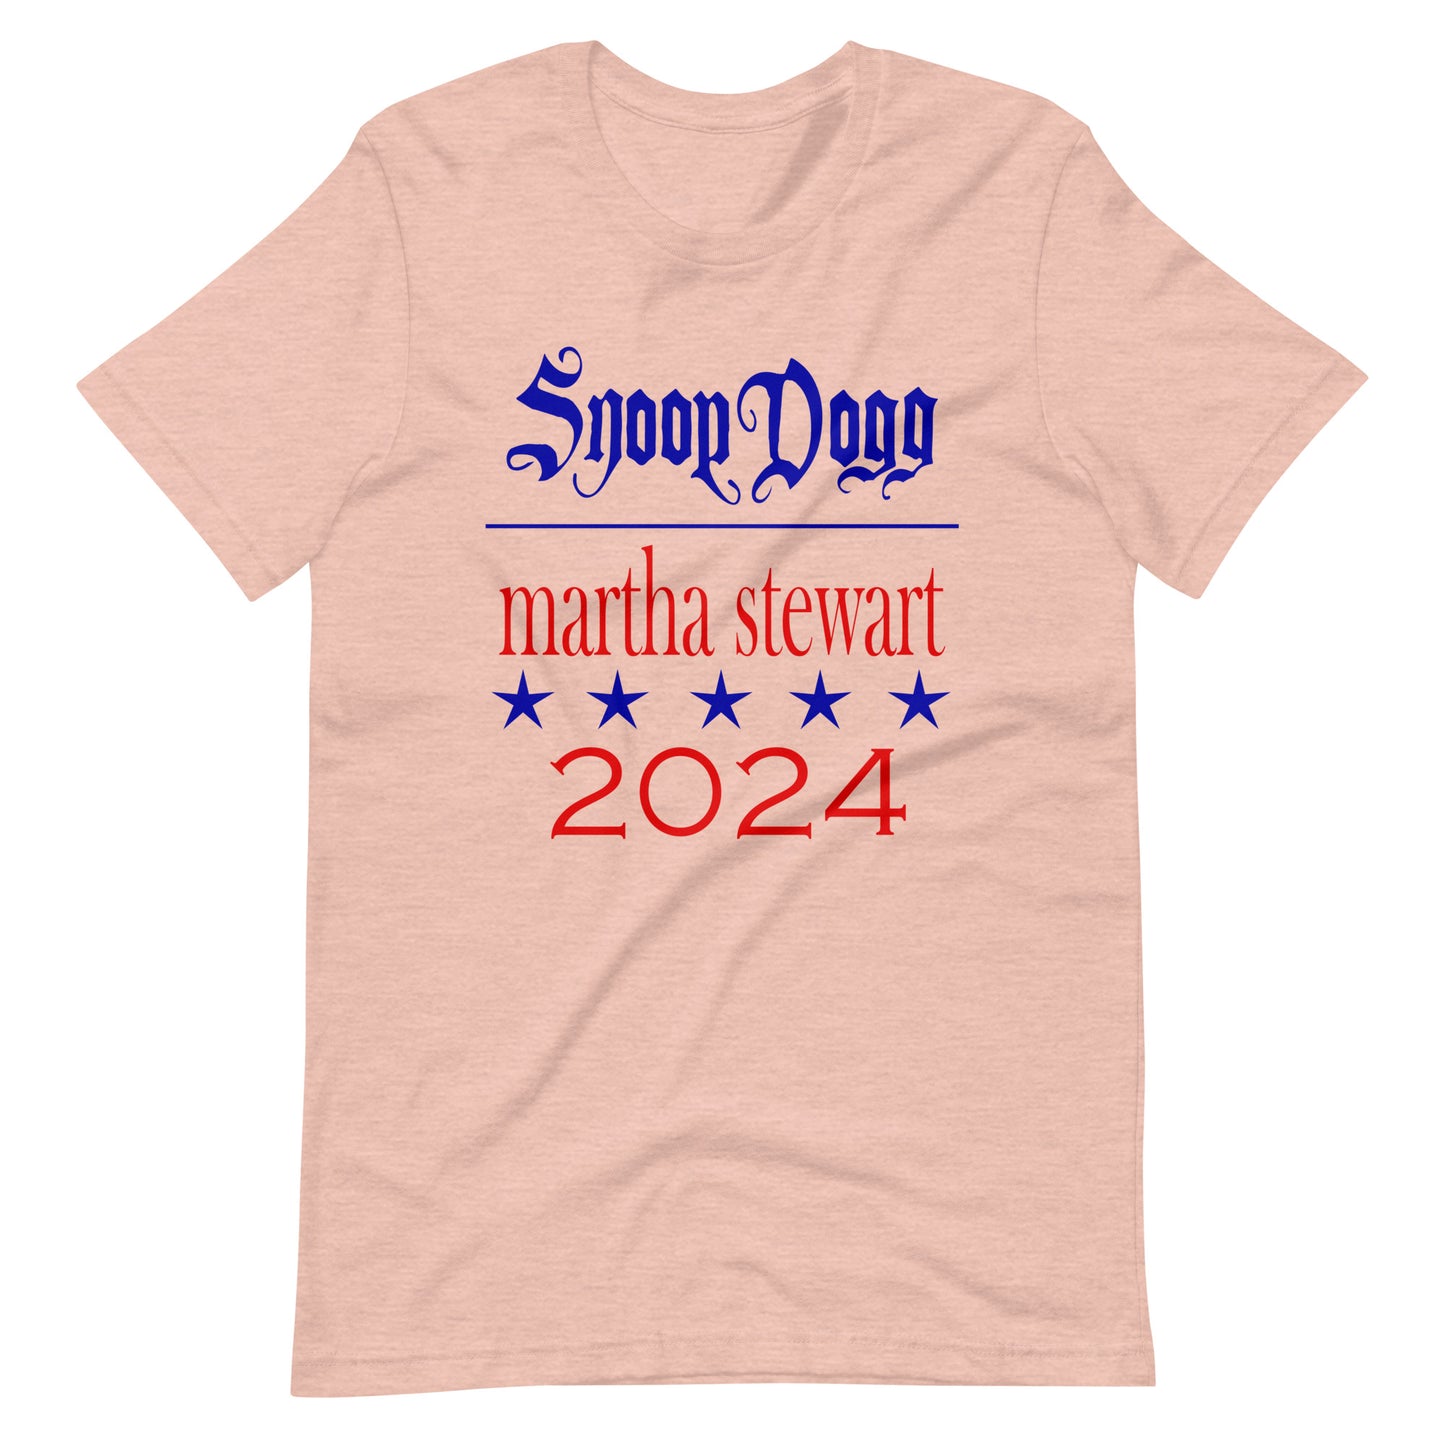 Snoop Dogg and Martha Stewart 2024, Unisex t-shirt